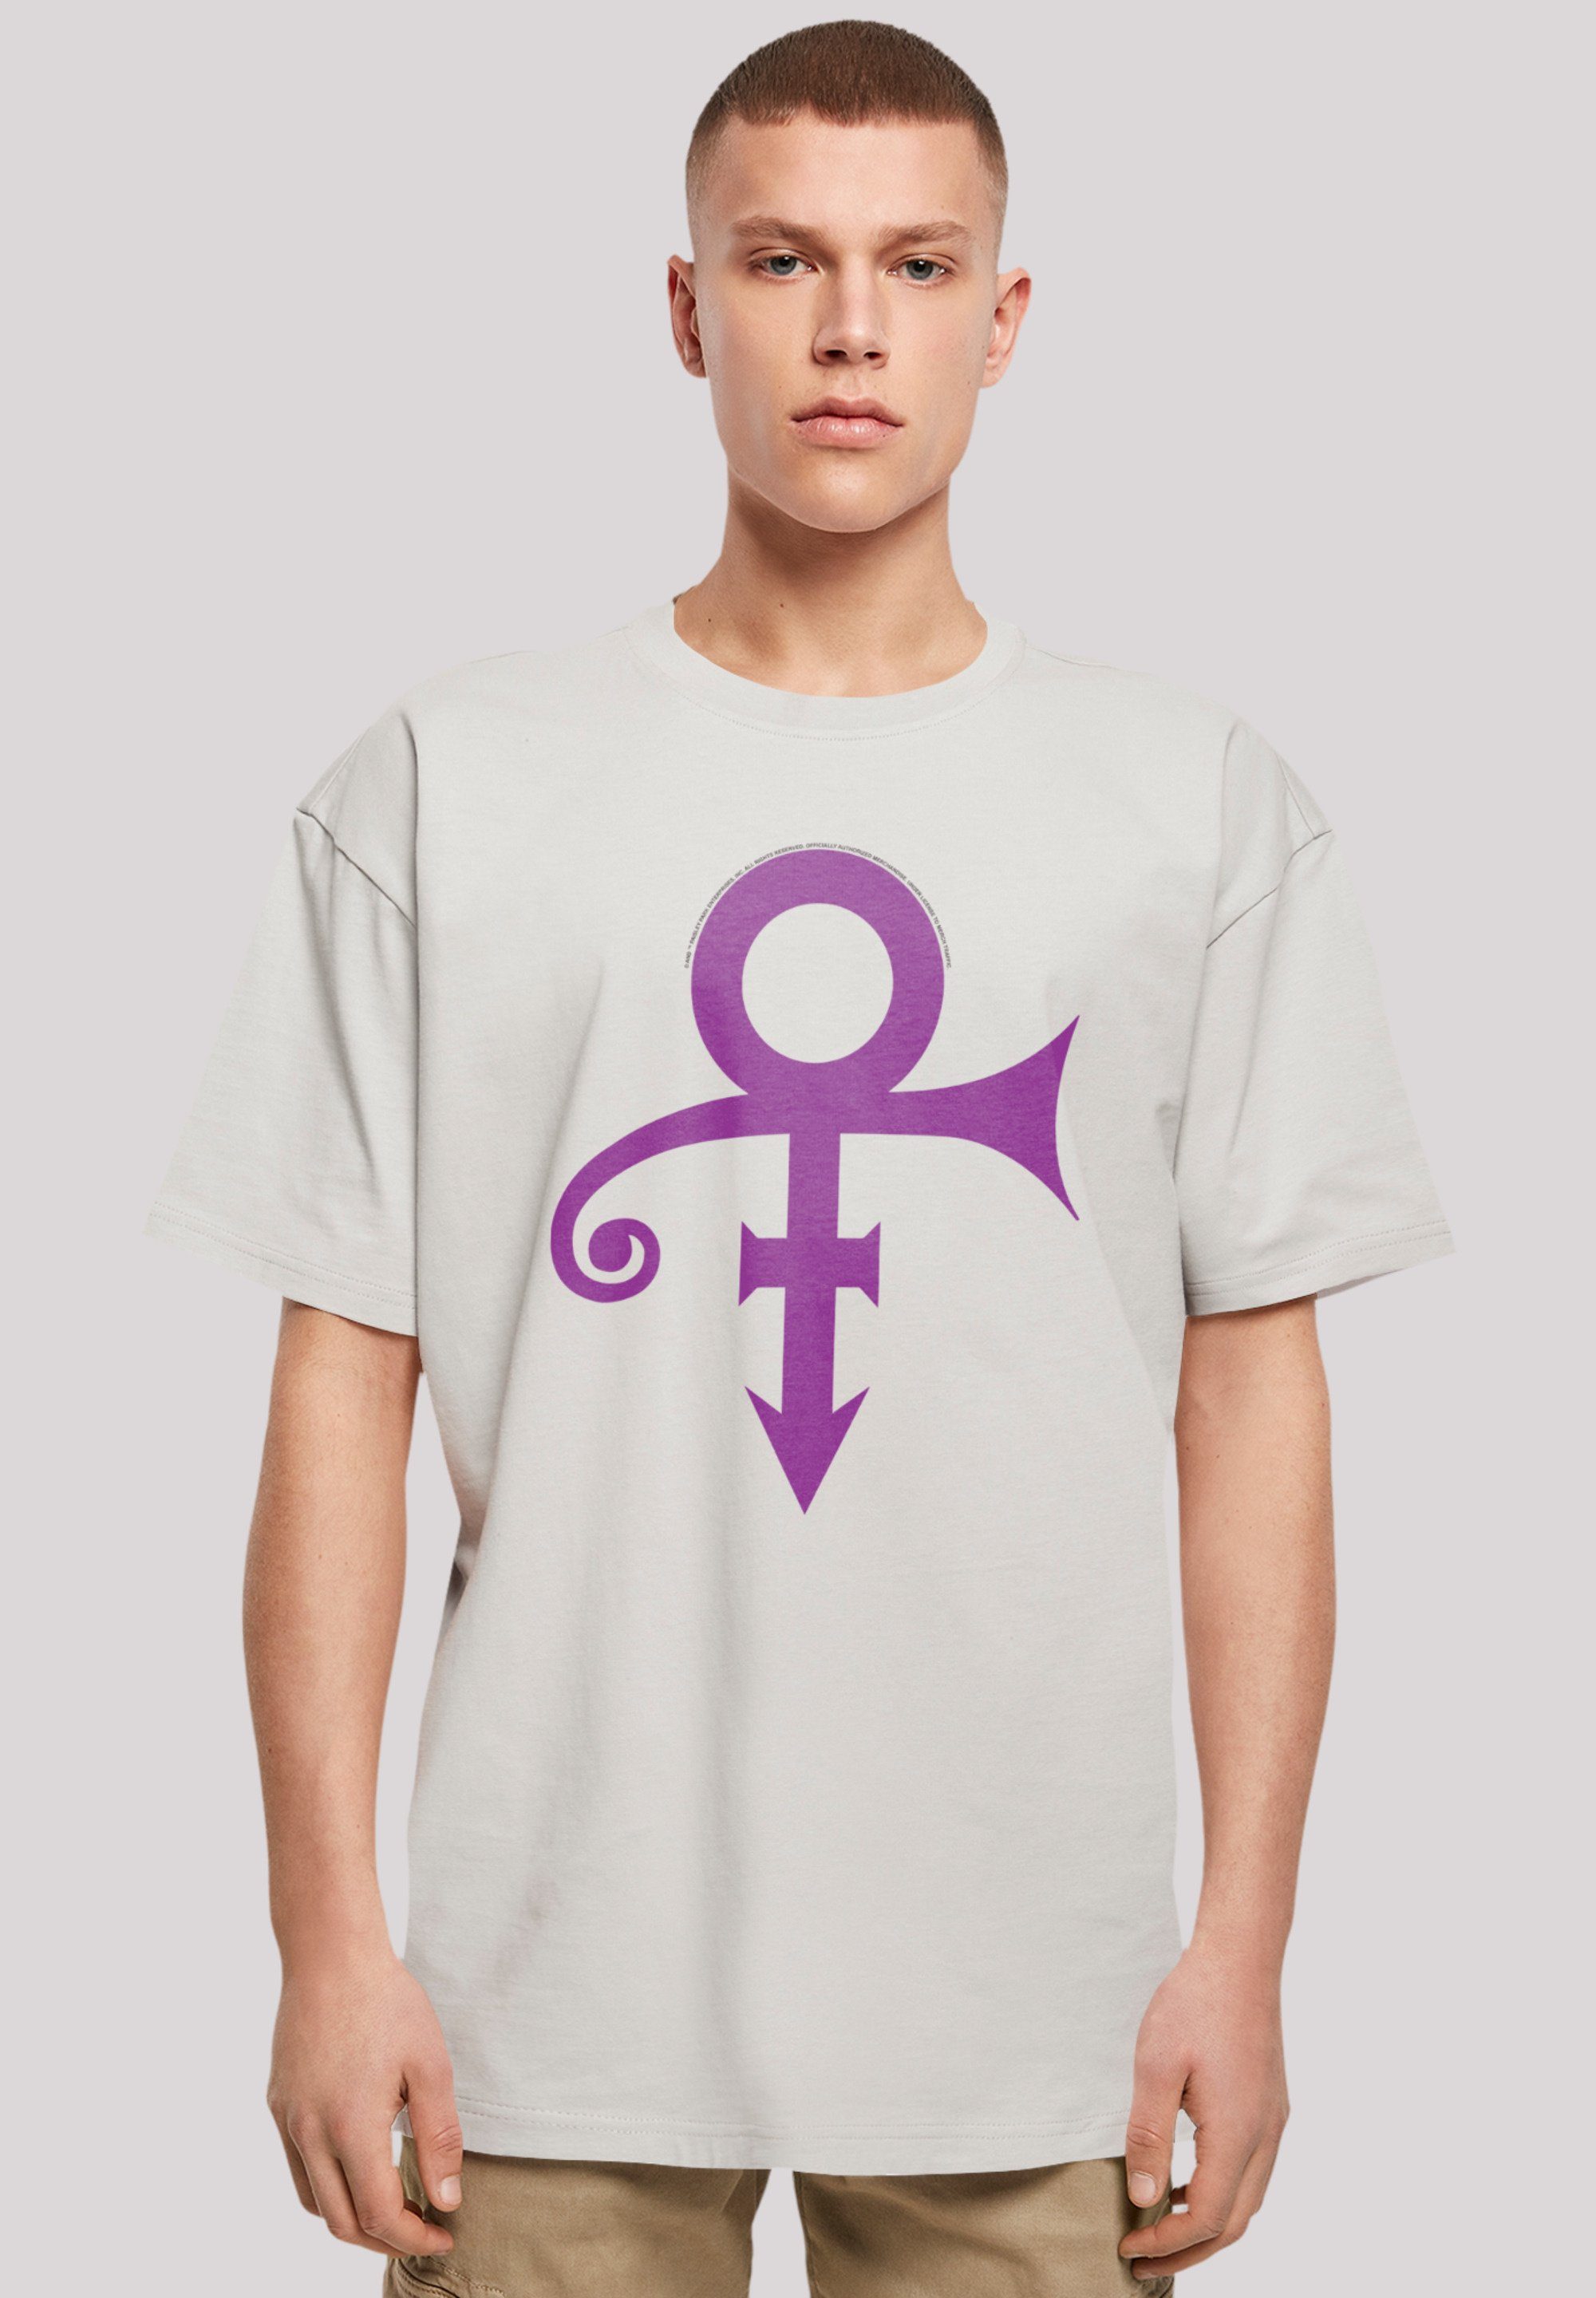 Album Prince Logo Qualität, Band F4NT4STIC Musik T-Shirt Rock-Musik, Premium